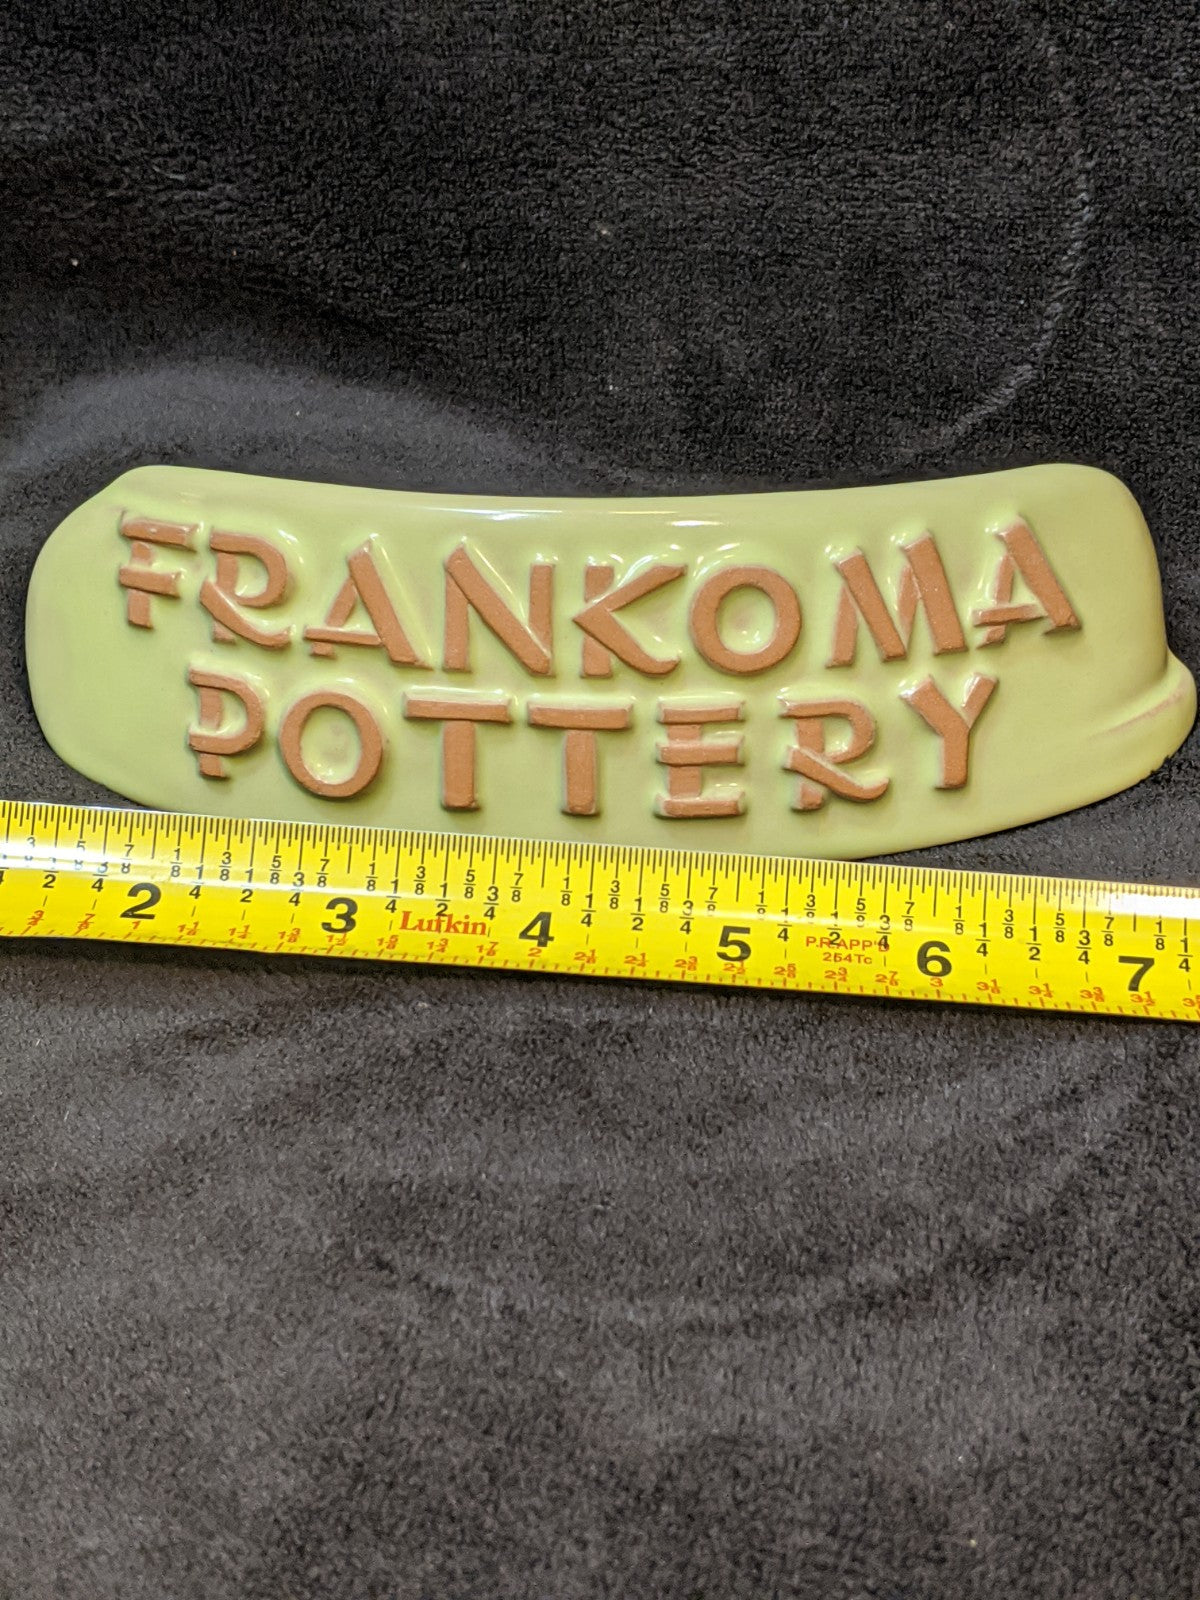 Vintage Frankoma Pottery brand / retailer's medallion